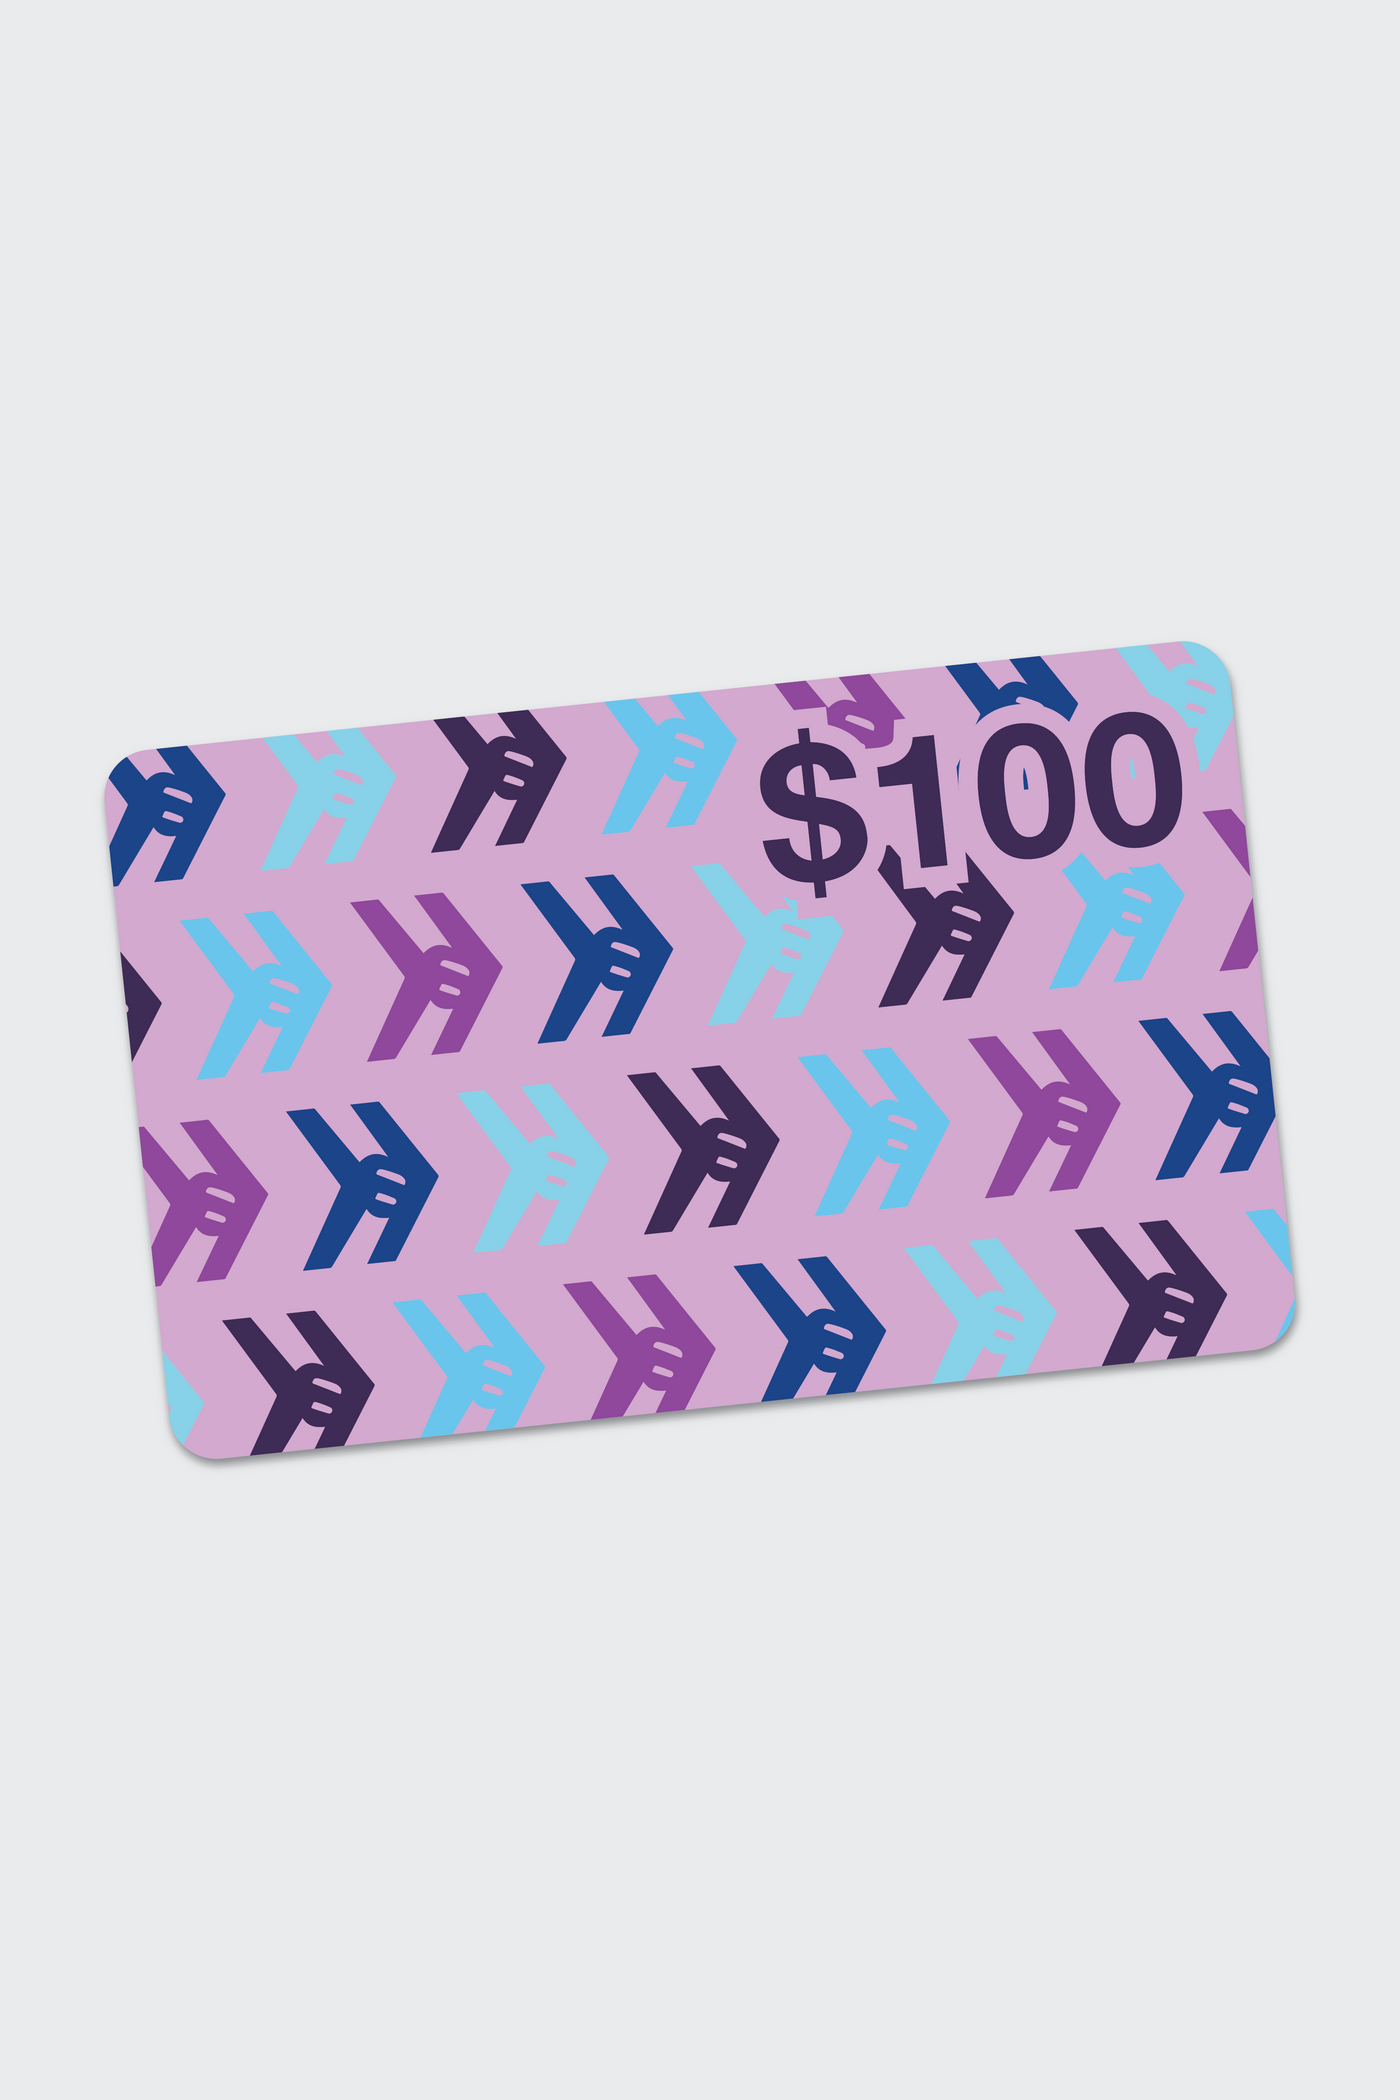 $100 Smosh Digital Gift Card